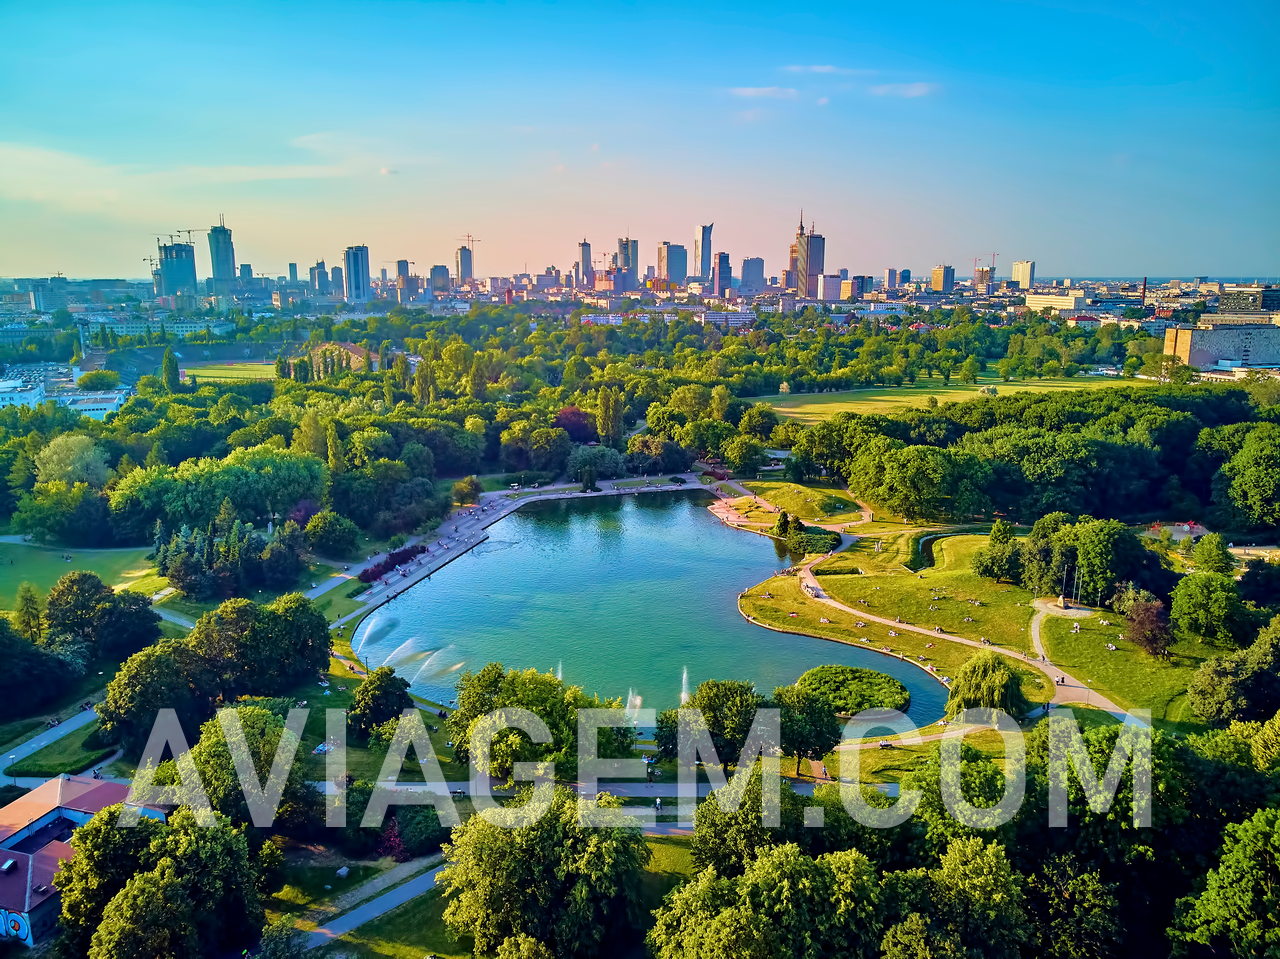 Warsaw, capital city of Poland